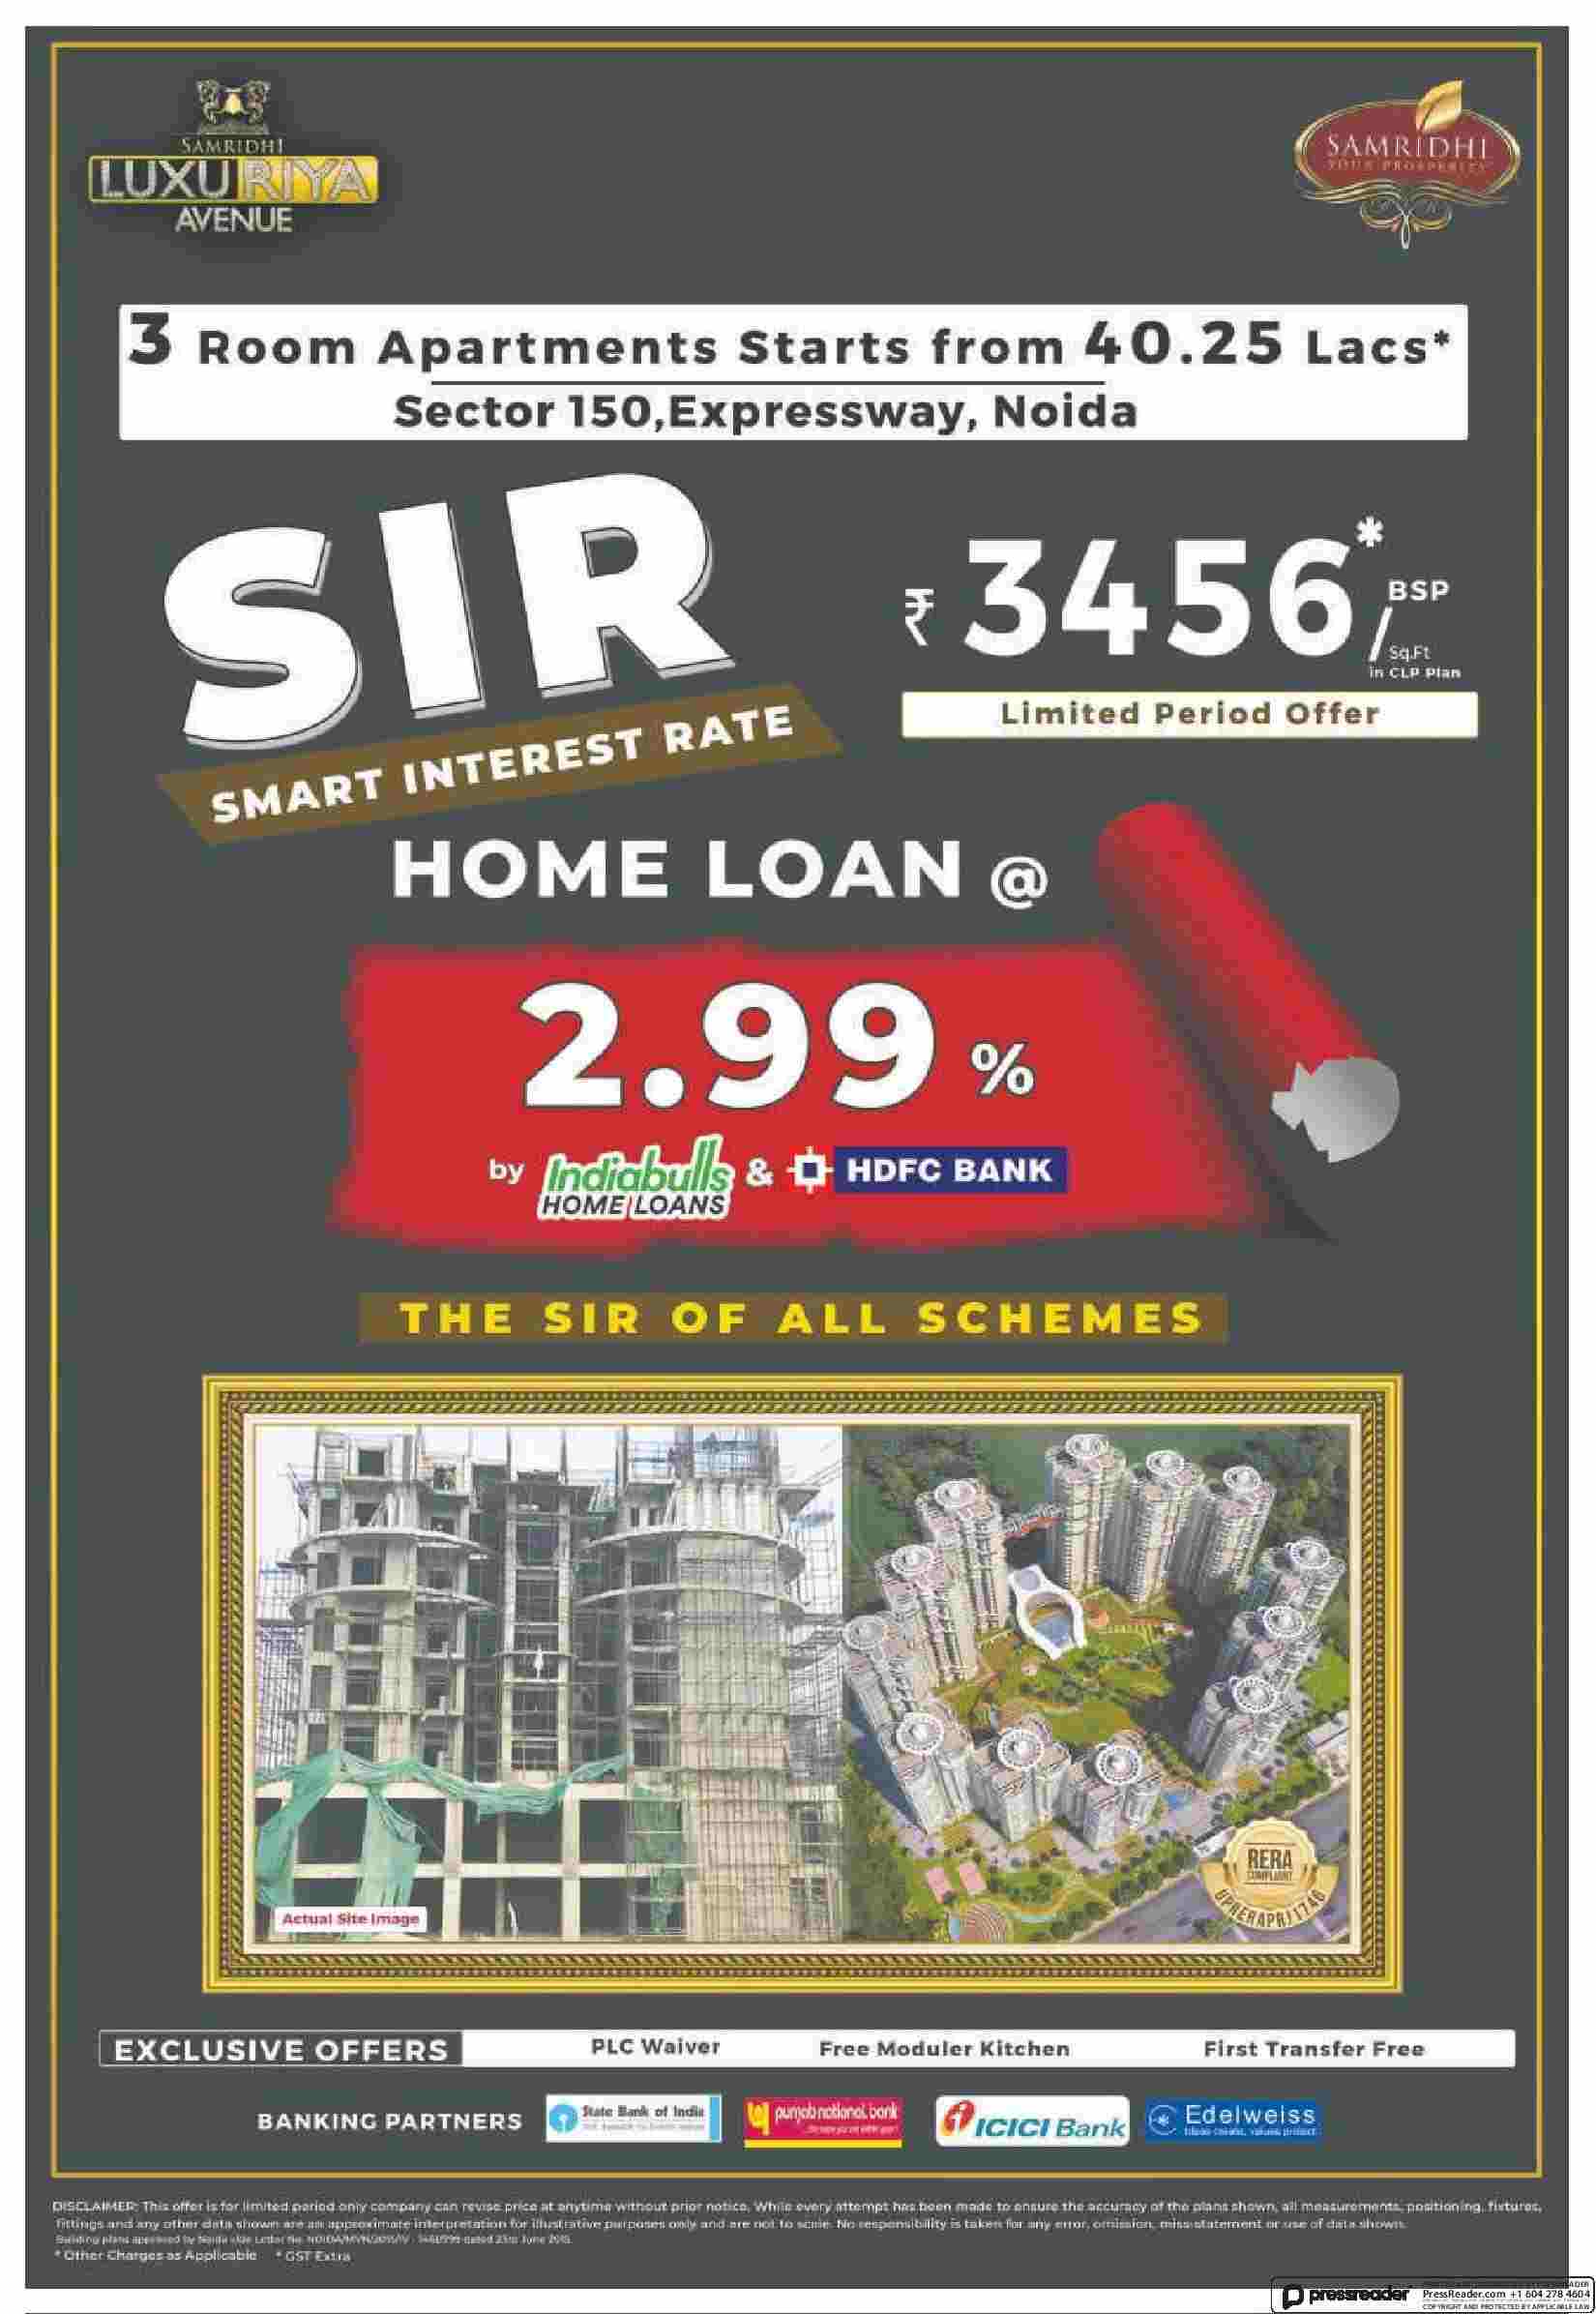 Book with home loan @ 2.99% at Samridhi Luxuria Avenue in Noida Update